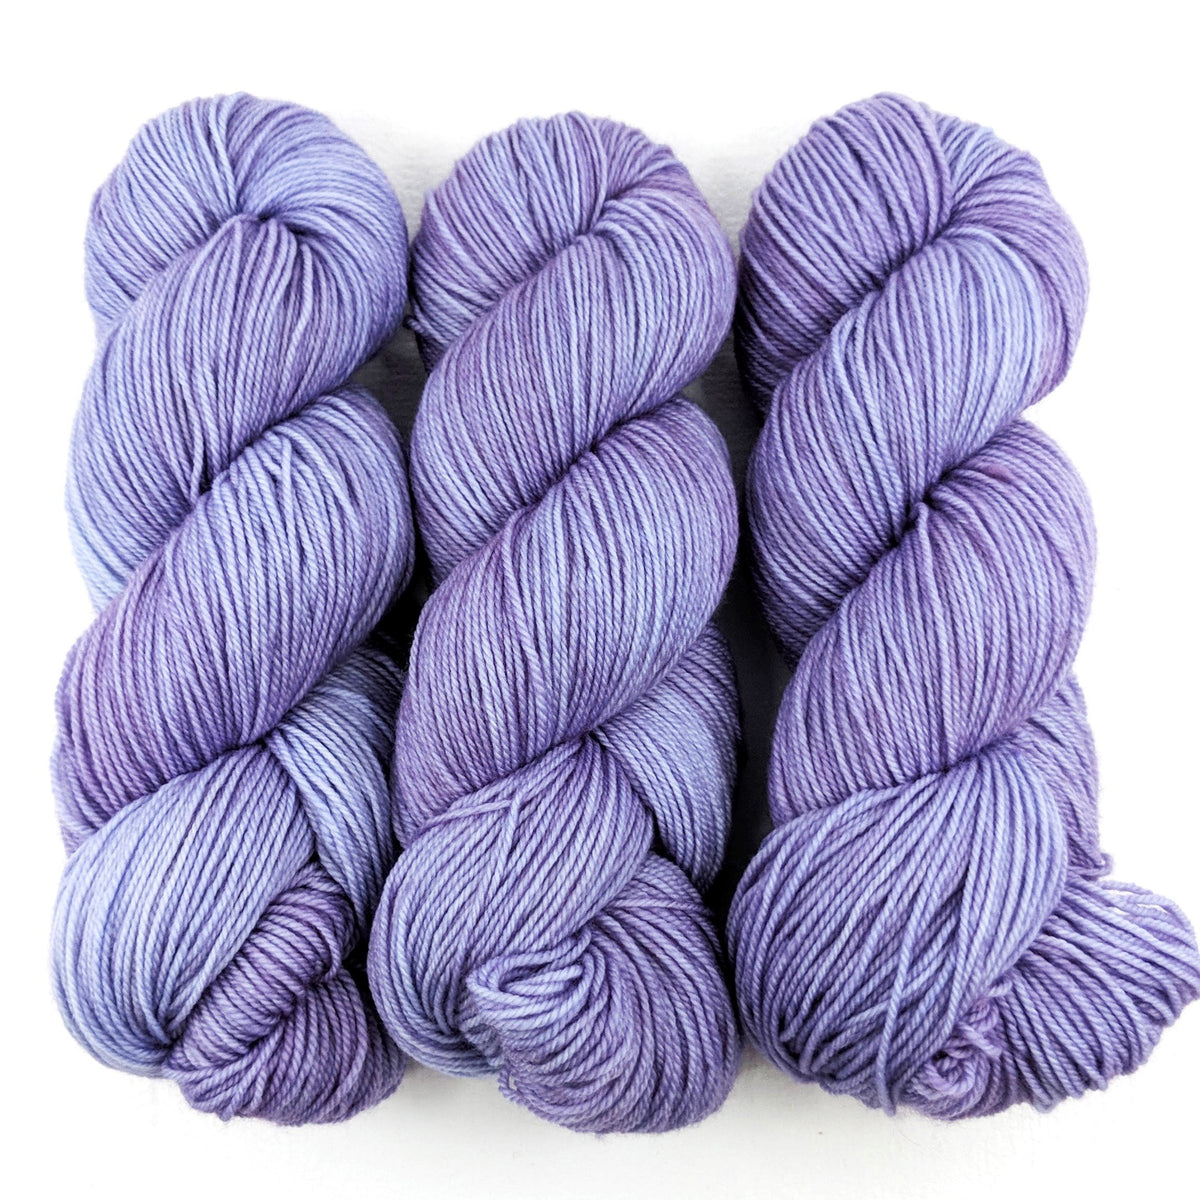 English Lavender - Merino DK / Light Worsted - Dyed Stock